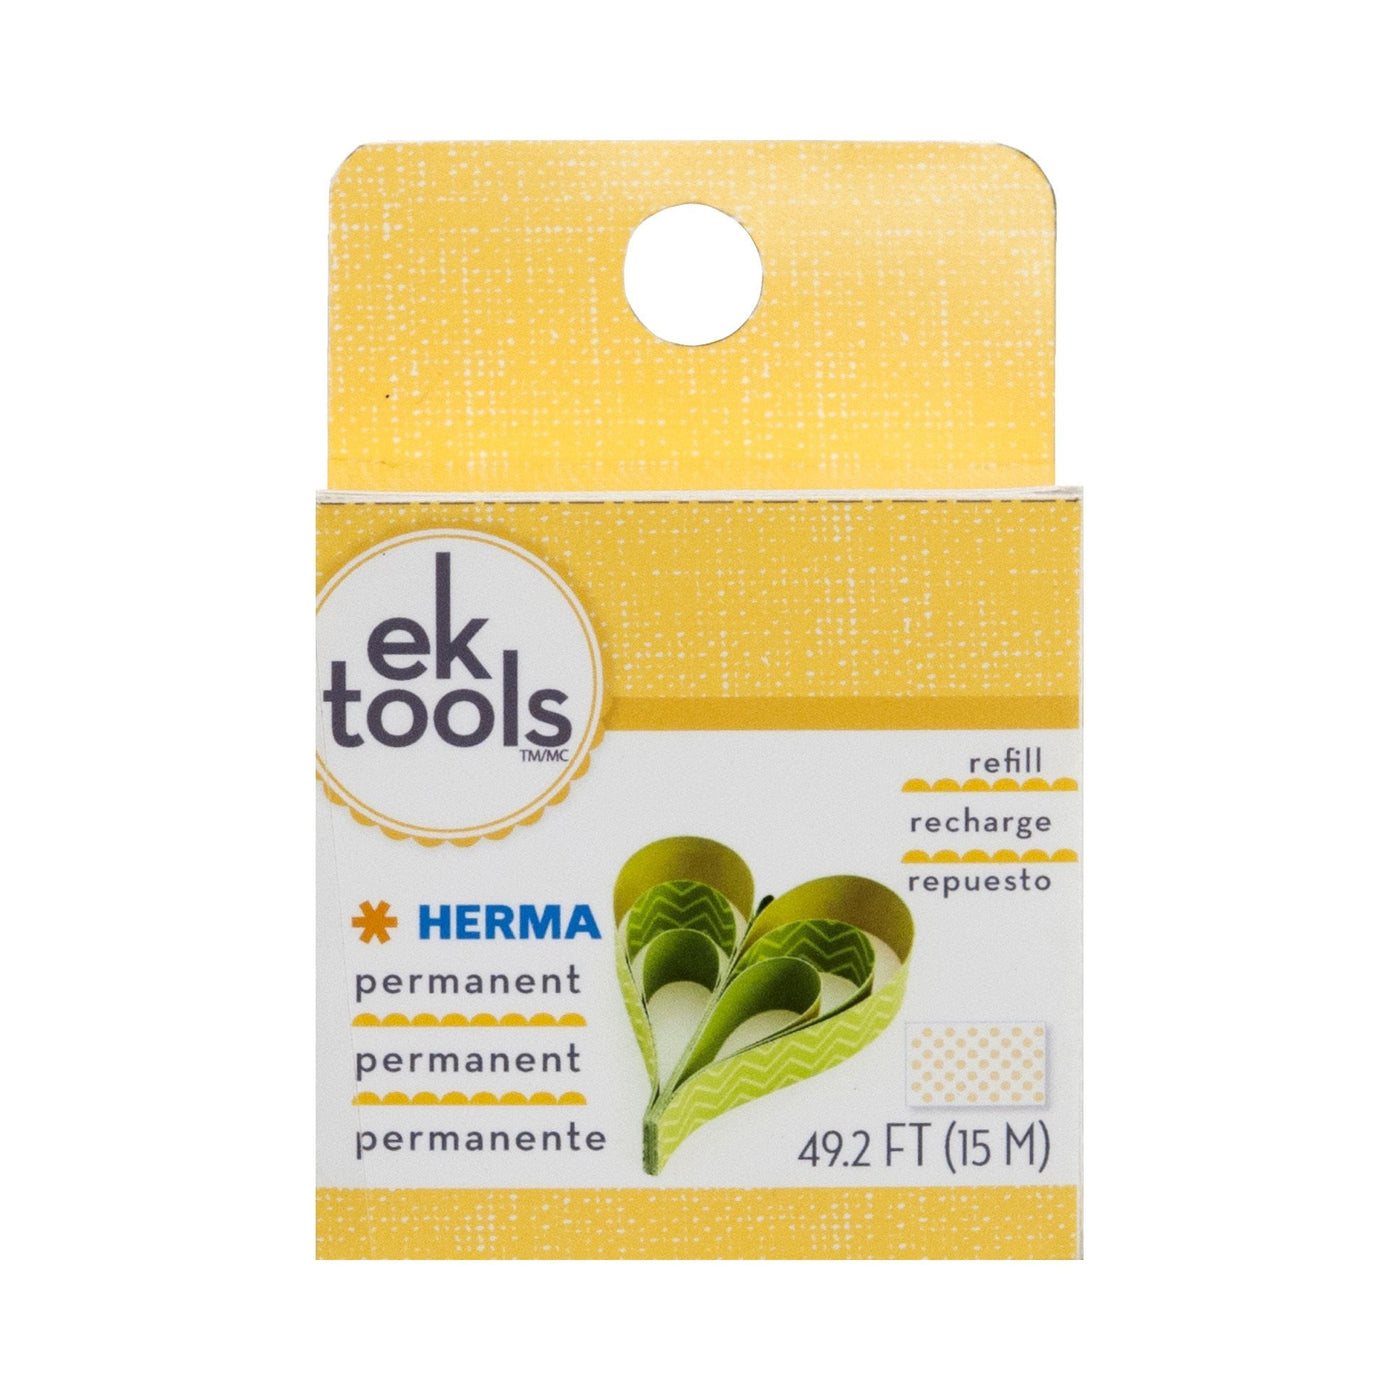 HERMA Classic dotto® adhesive runner tape refill by EK Success Brands